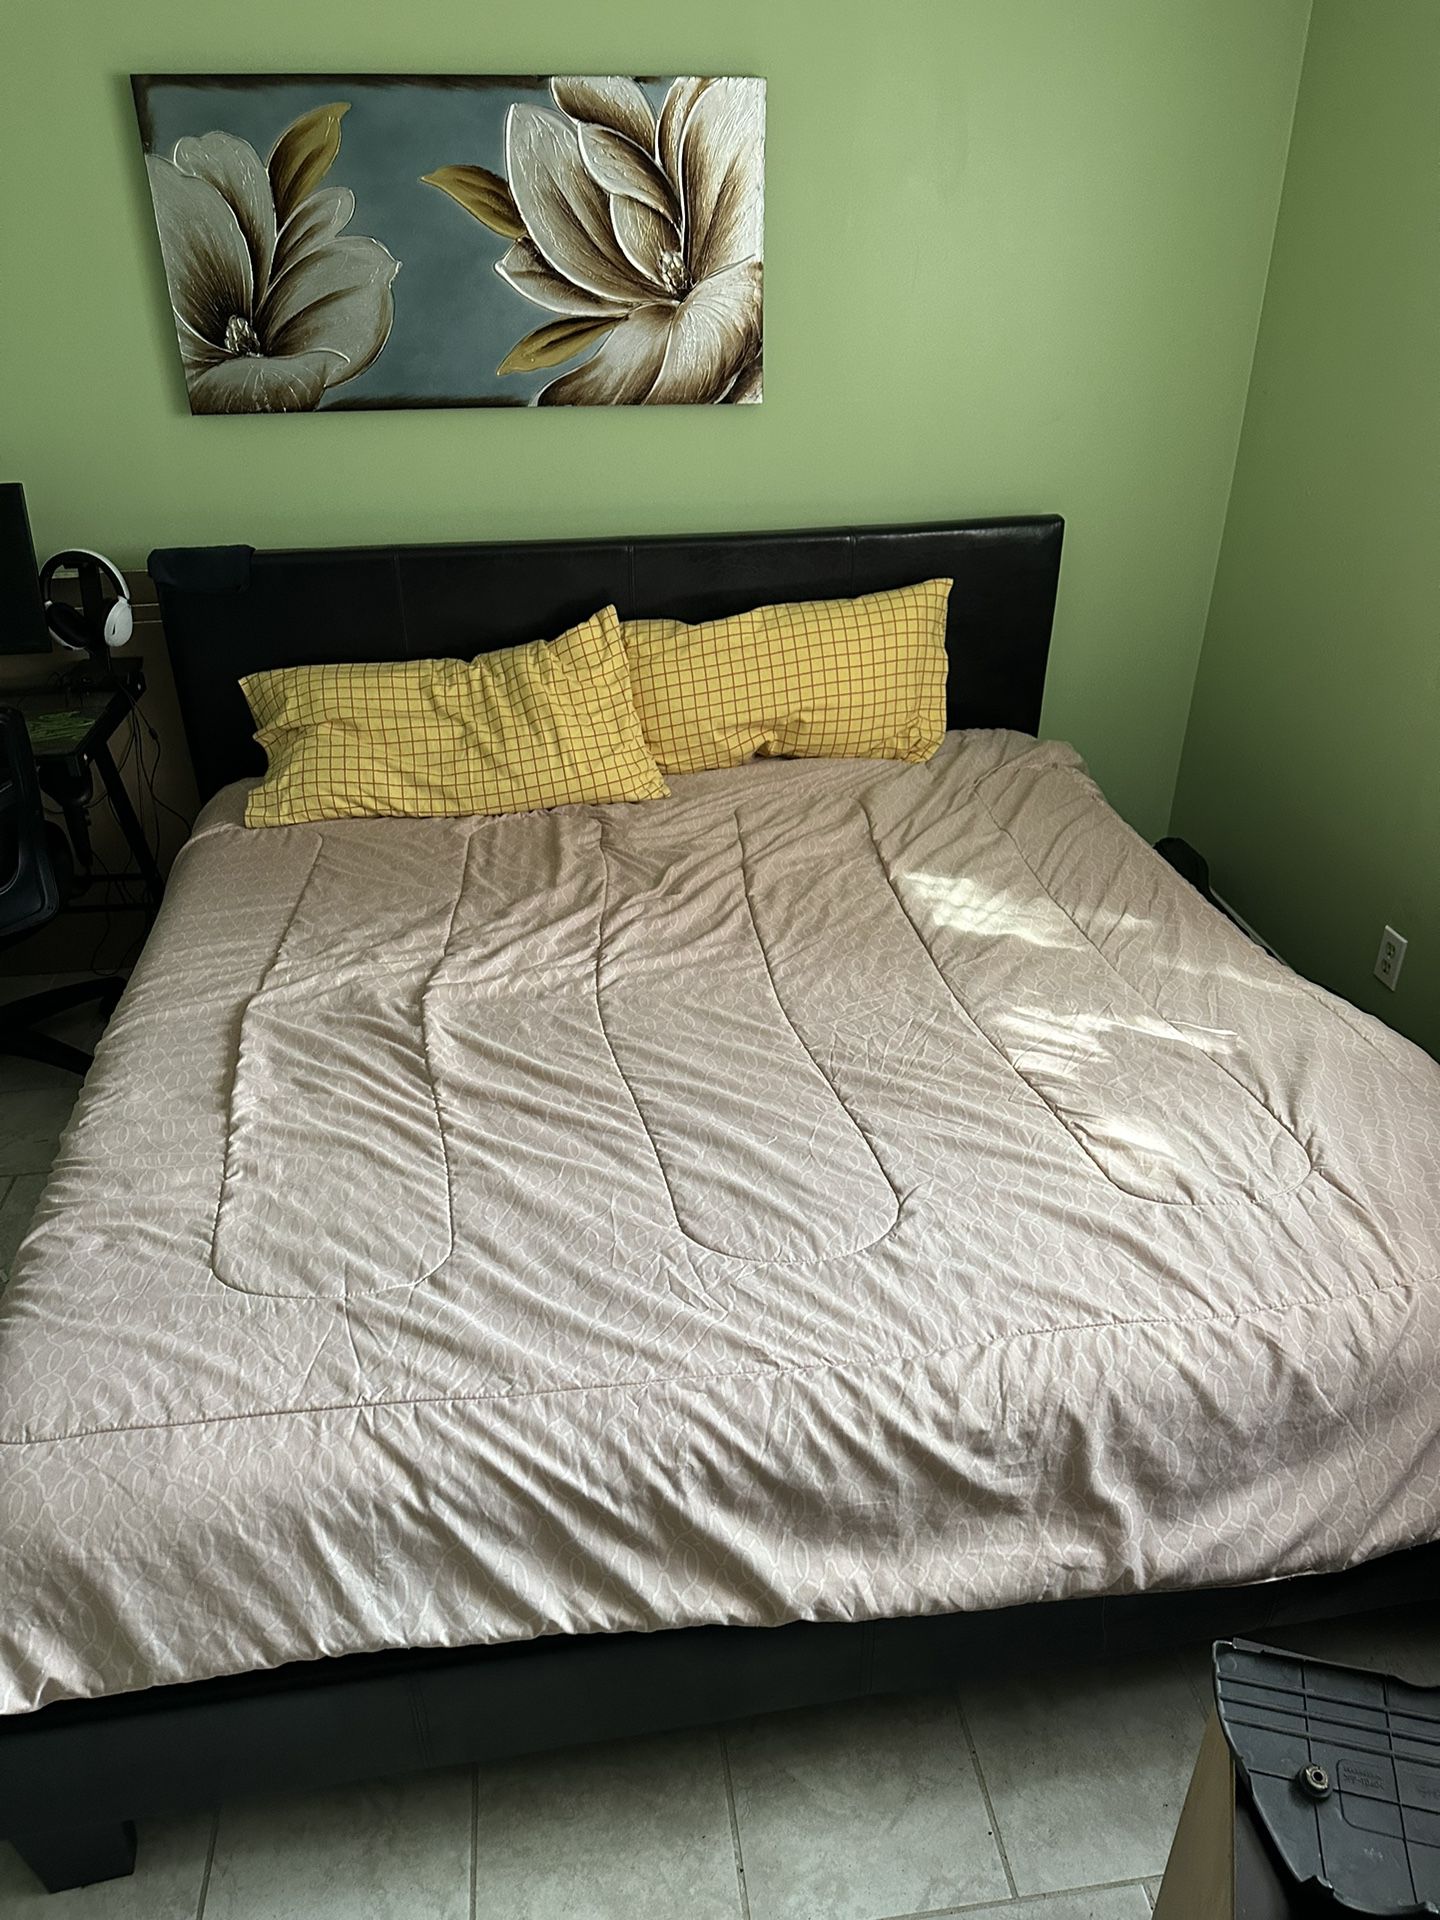 King Size Bed Frame & Mattress ! $ 240 Only Cash